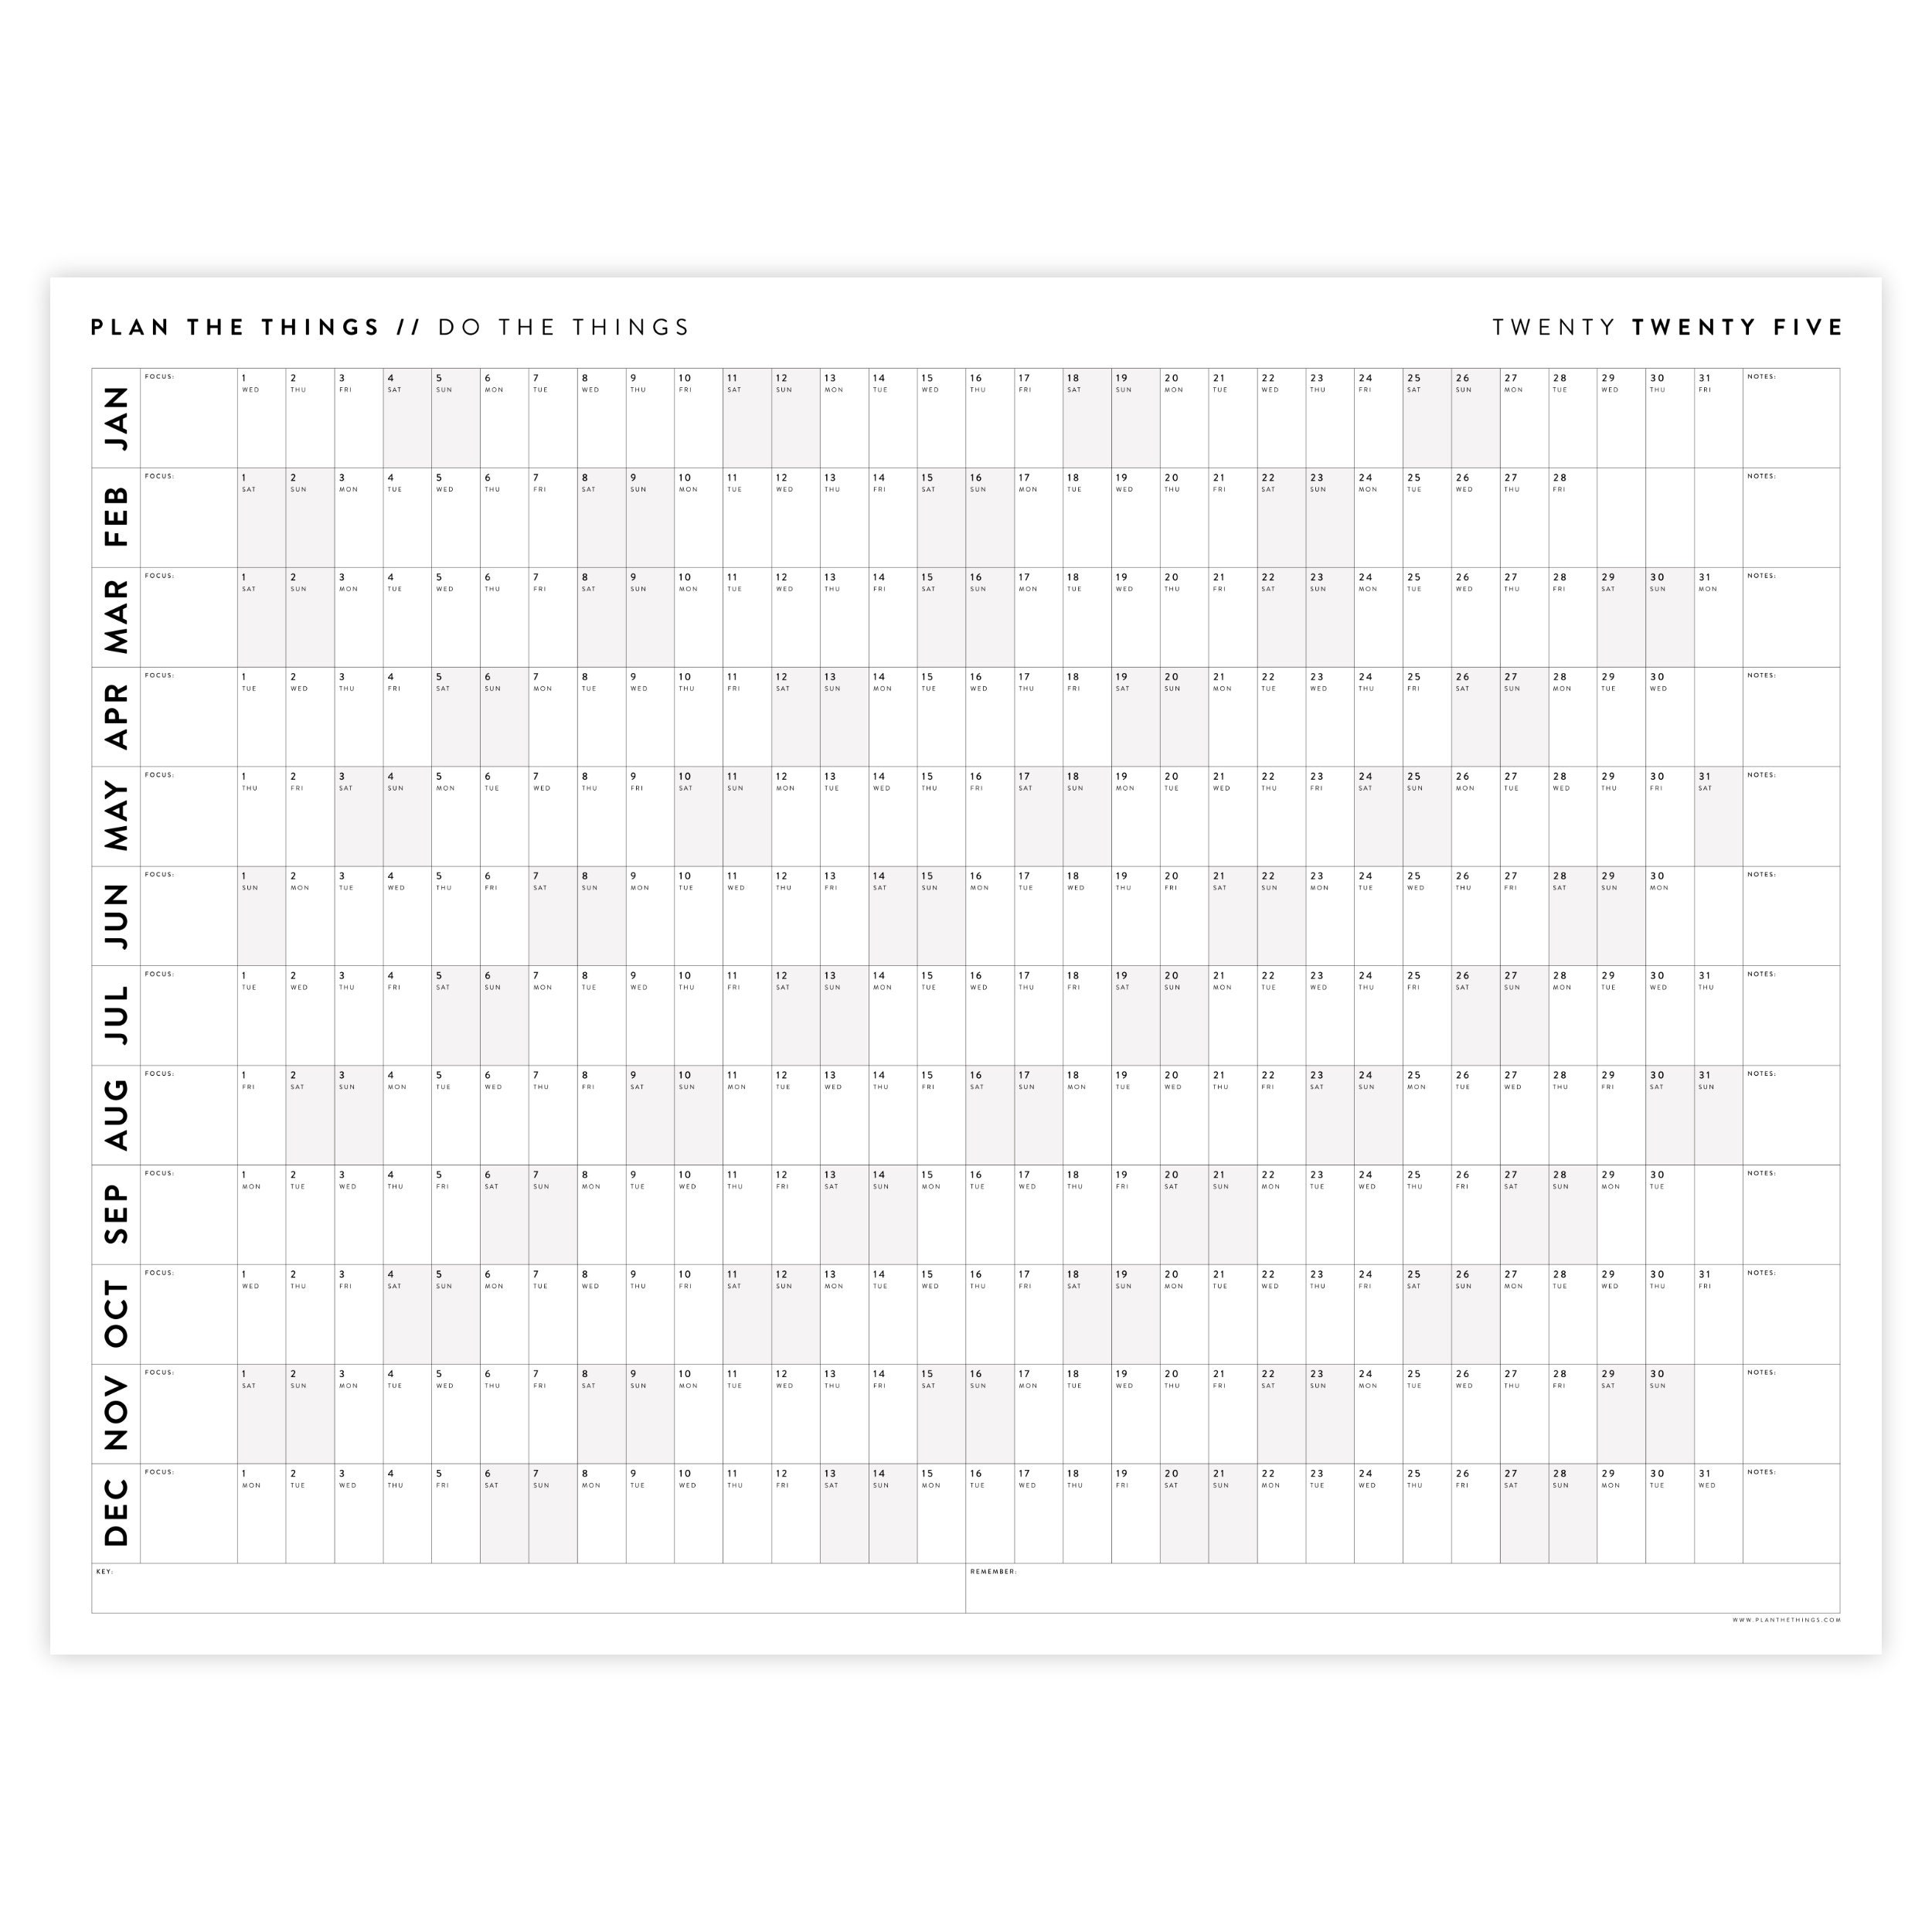 PRINTABLE 2025 Wall Calendar Digital PDF Instant Download Etsy